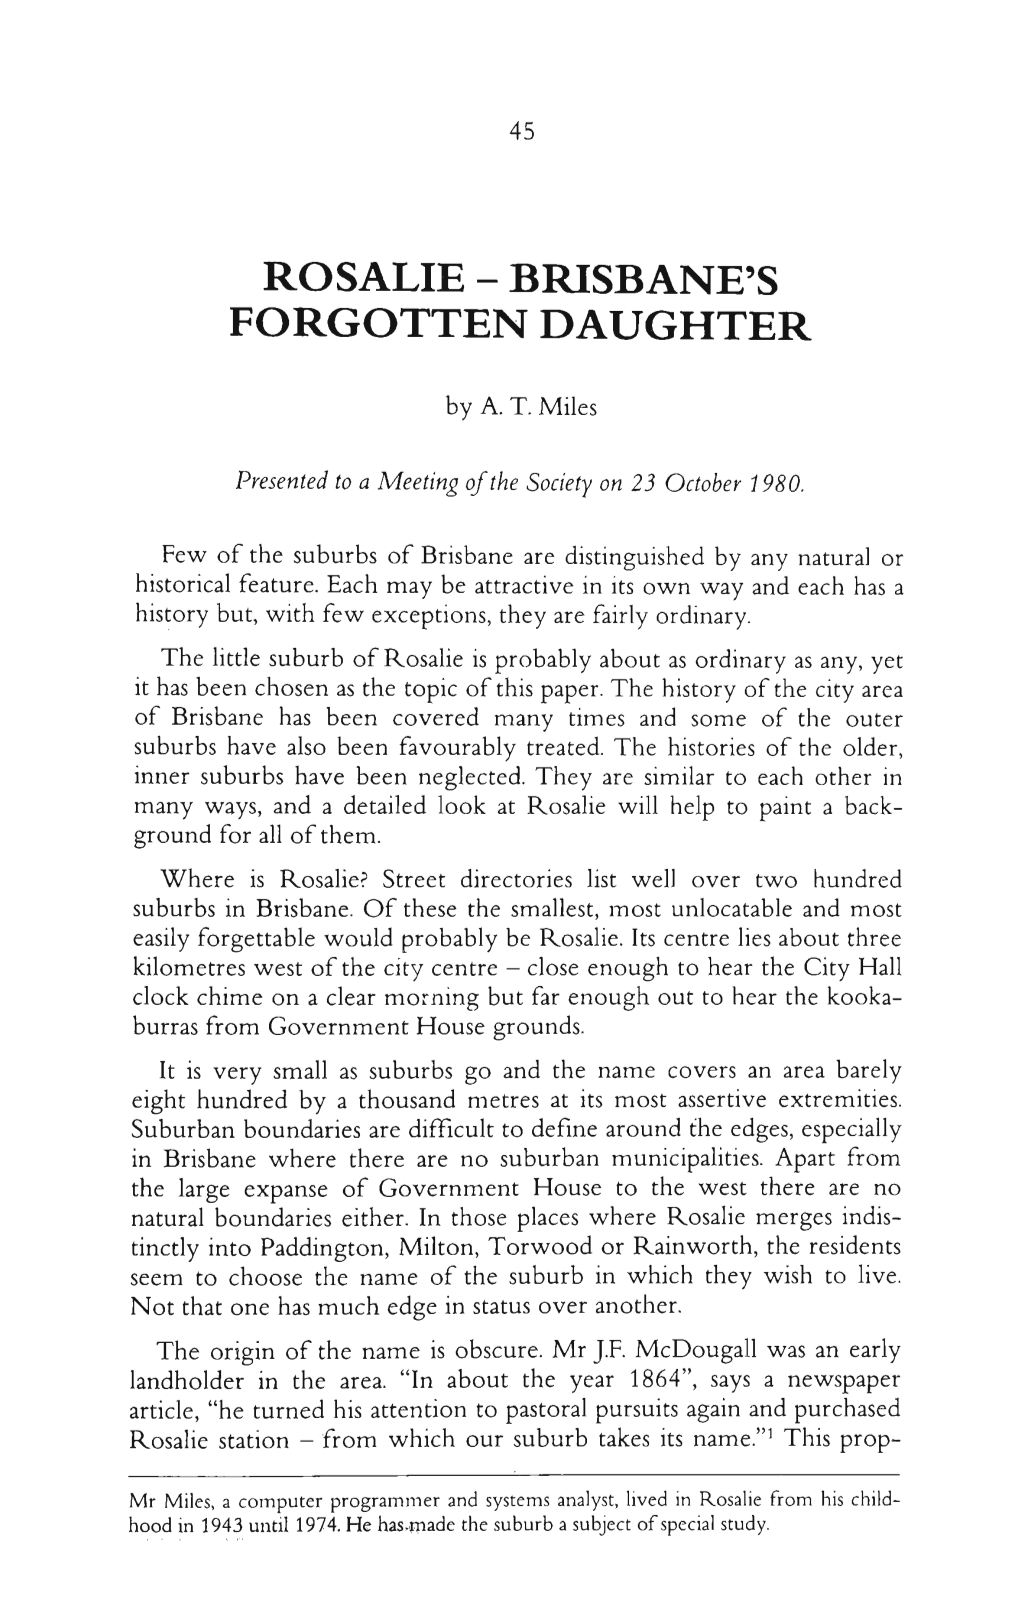 Rosalie - Brisbane's Forgotten Daughter